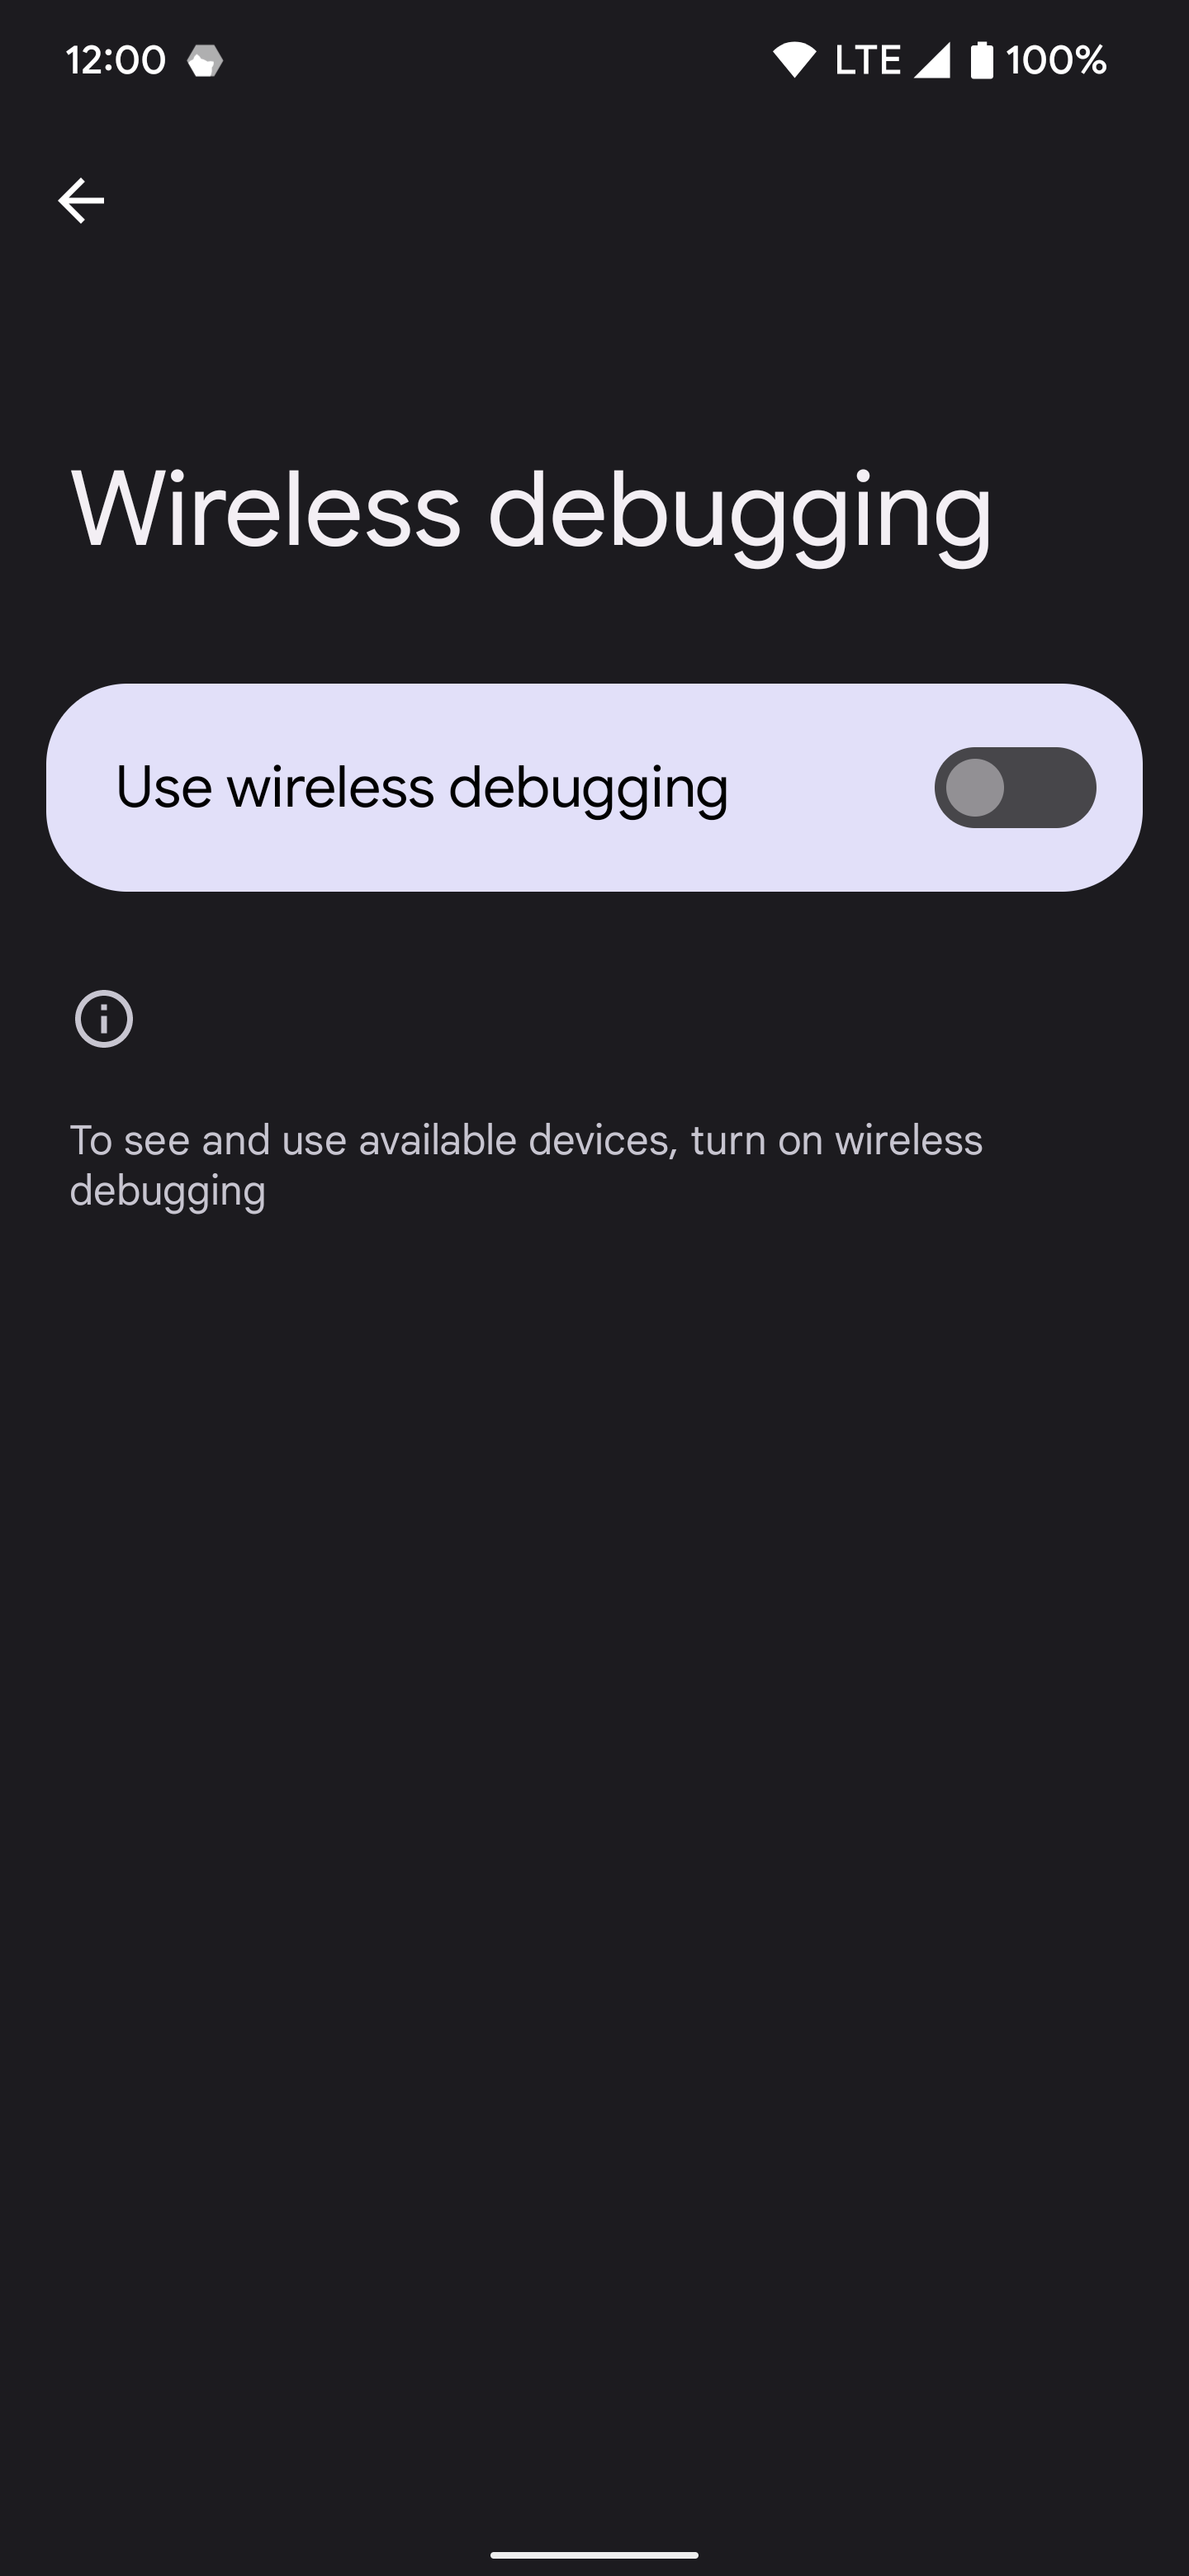 Enabling the Wireless debugging option.